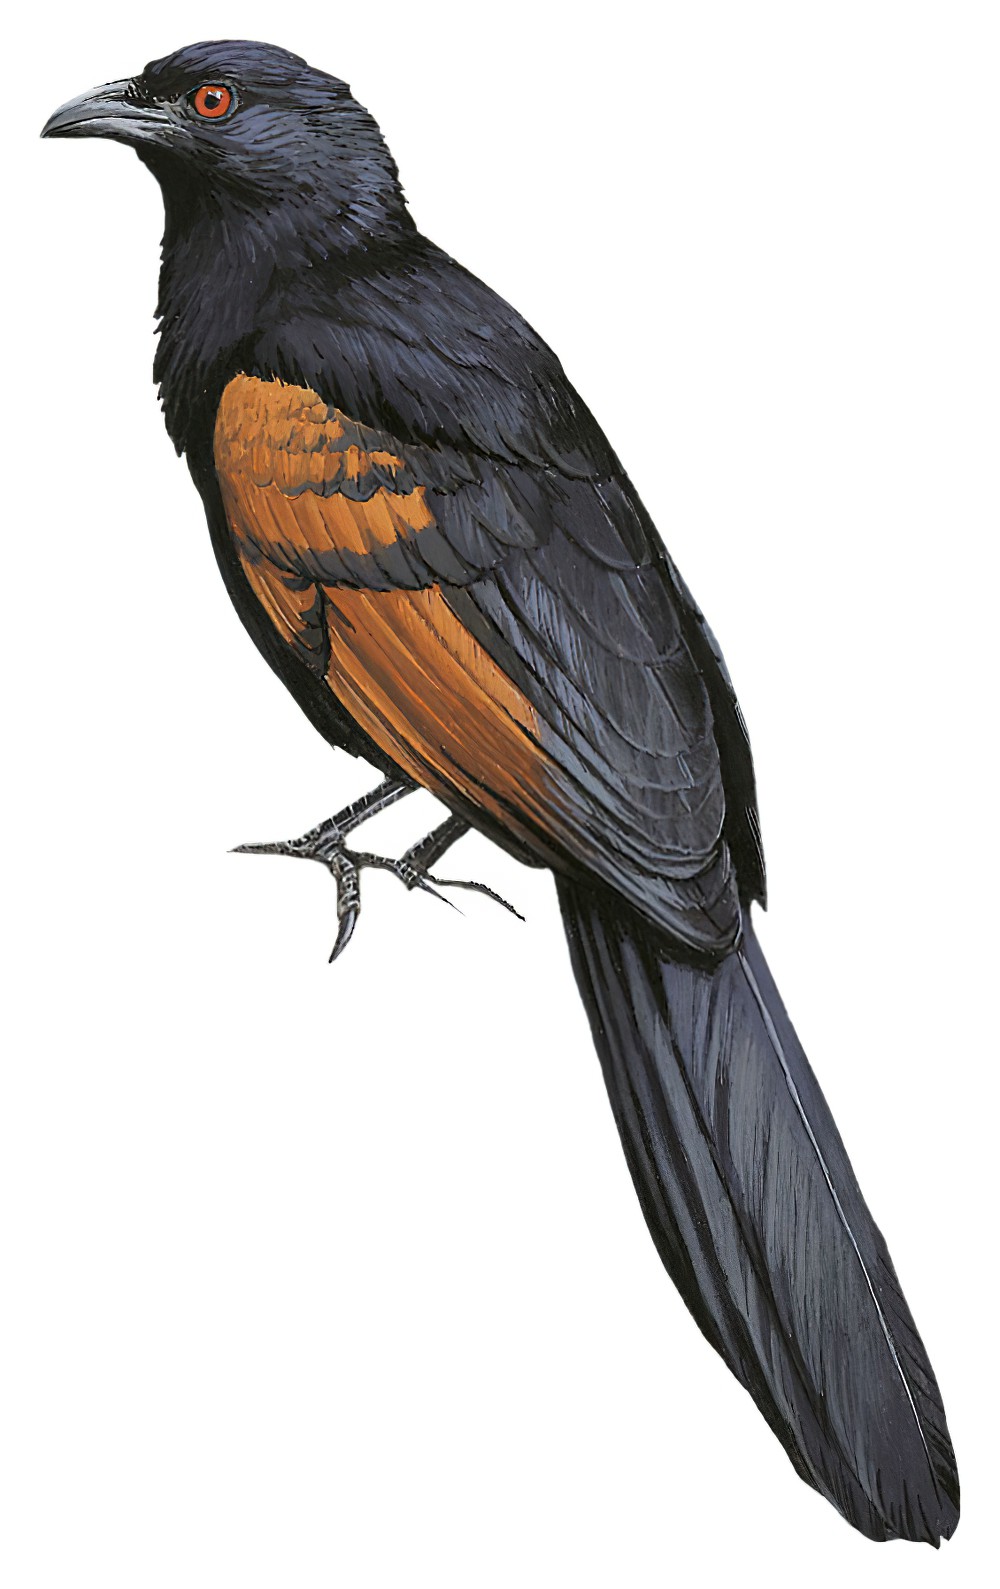 Sunda Coucal / Centropus nigrorufus